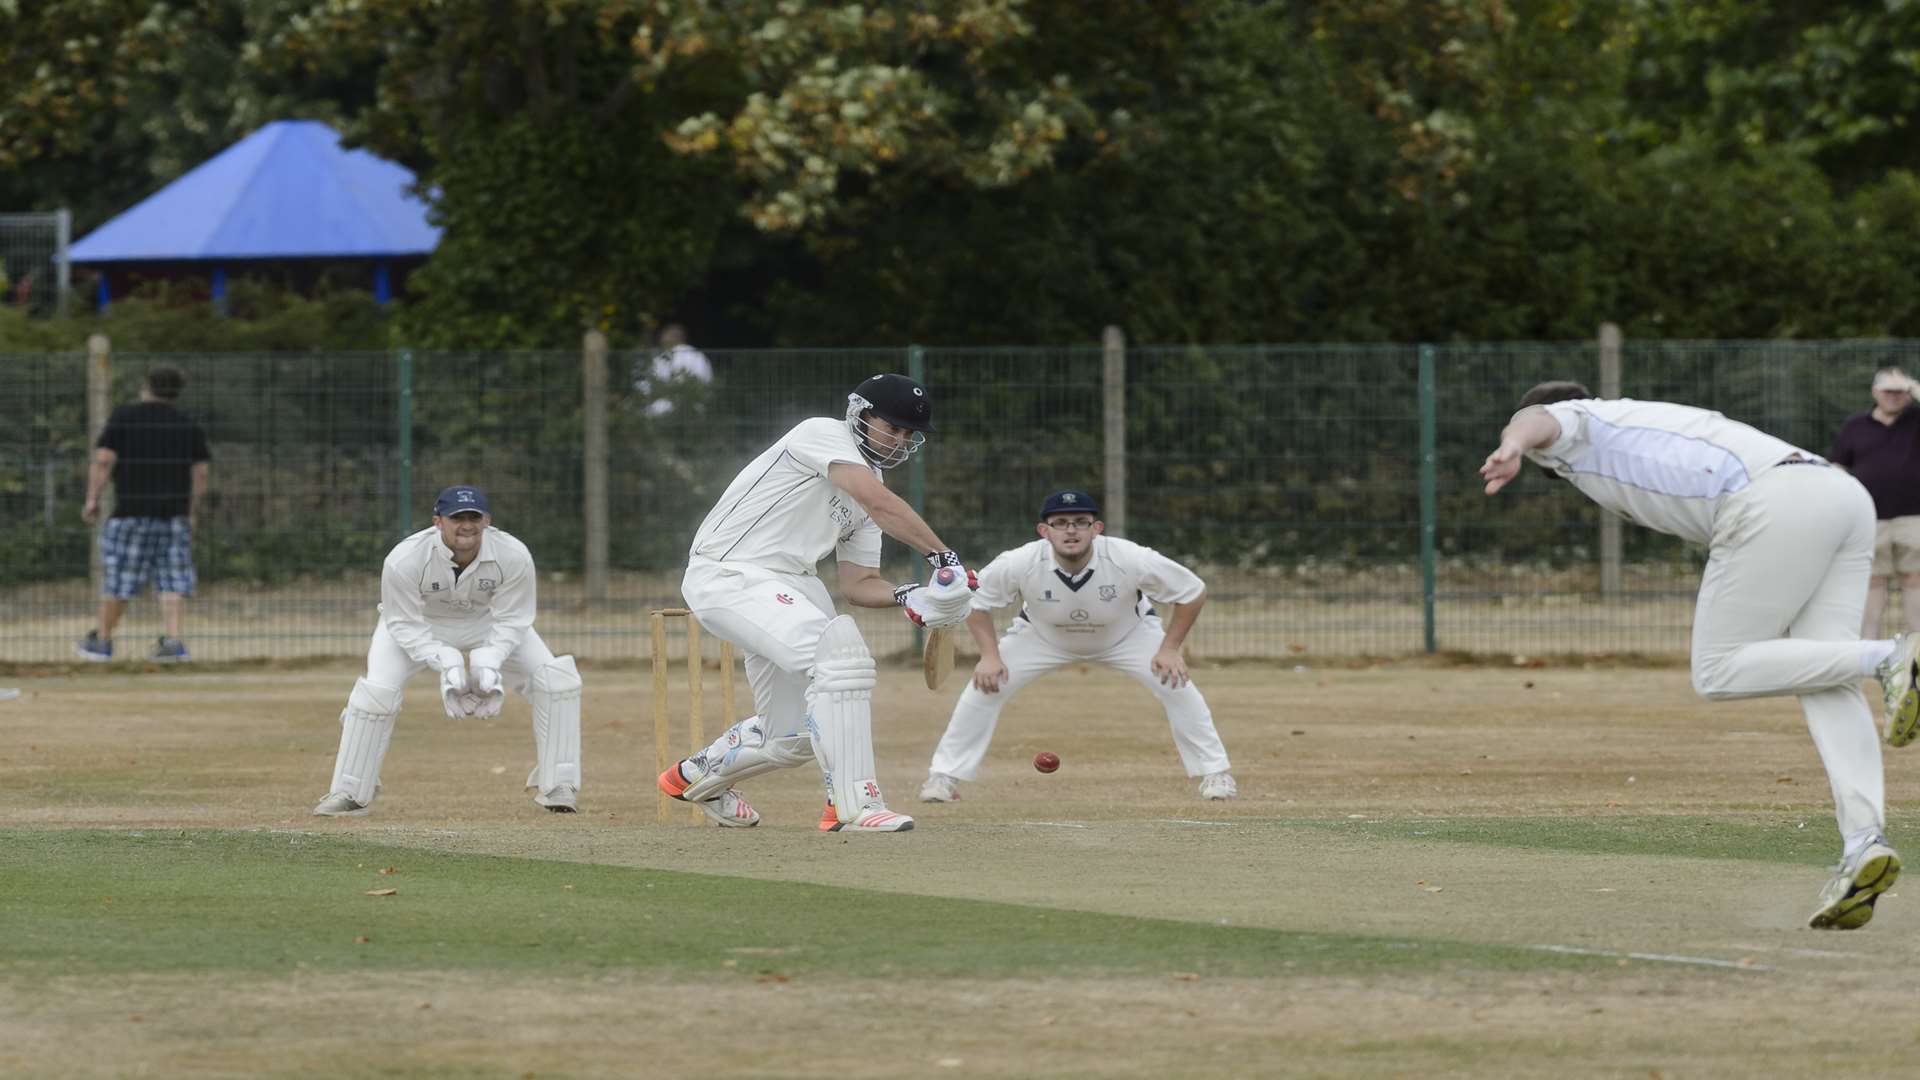 Cricket action from Hesketh Park, Dartford